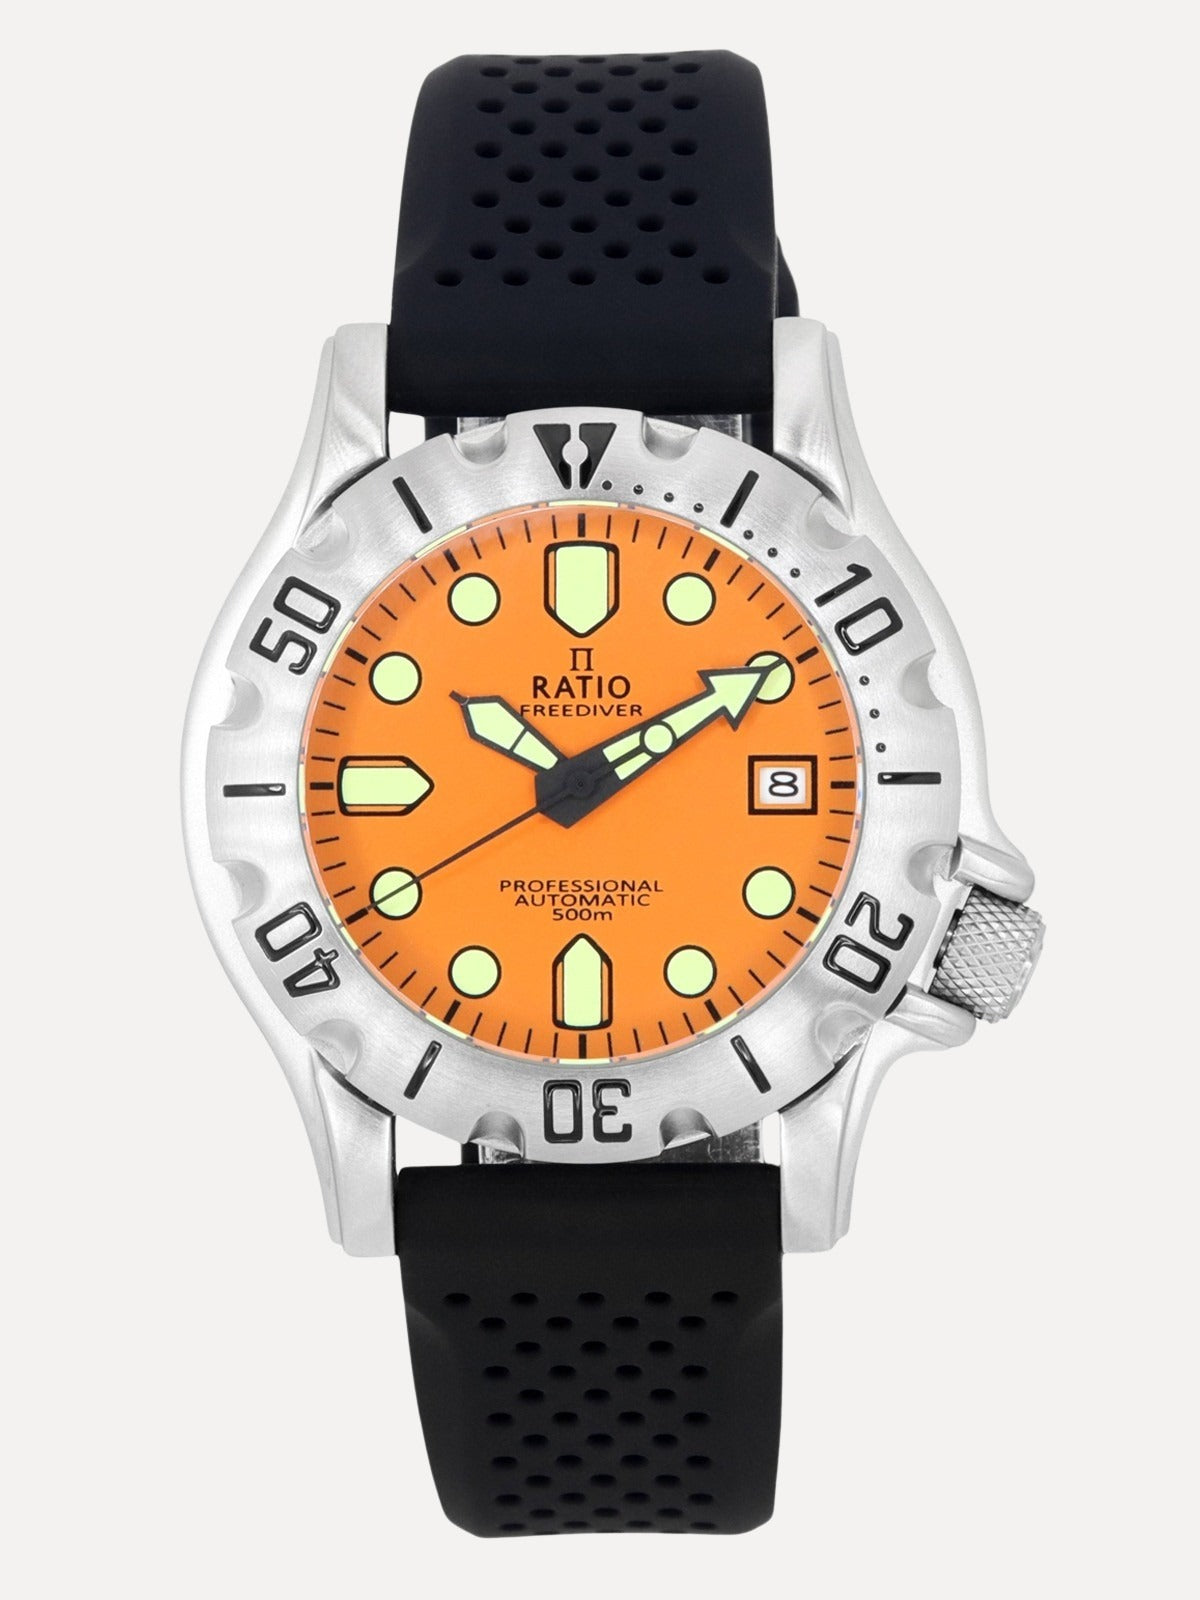 Ratio FreeDiver Professional Sapphire Orange Dial Automatic RTF011 500M Men's Watch